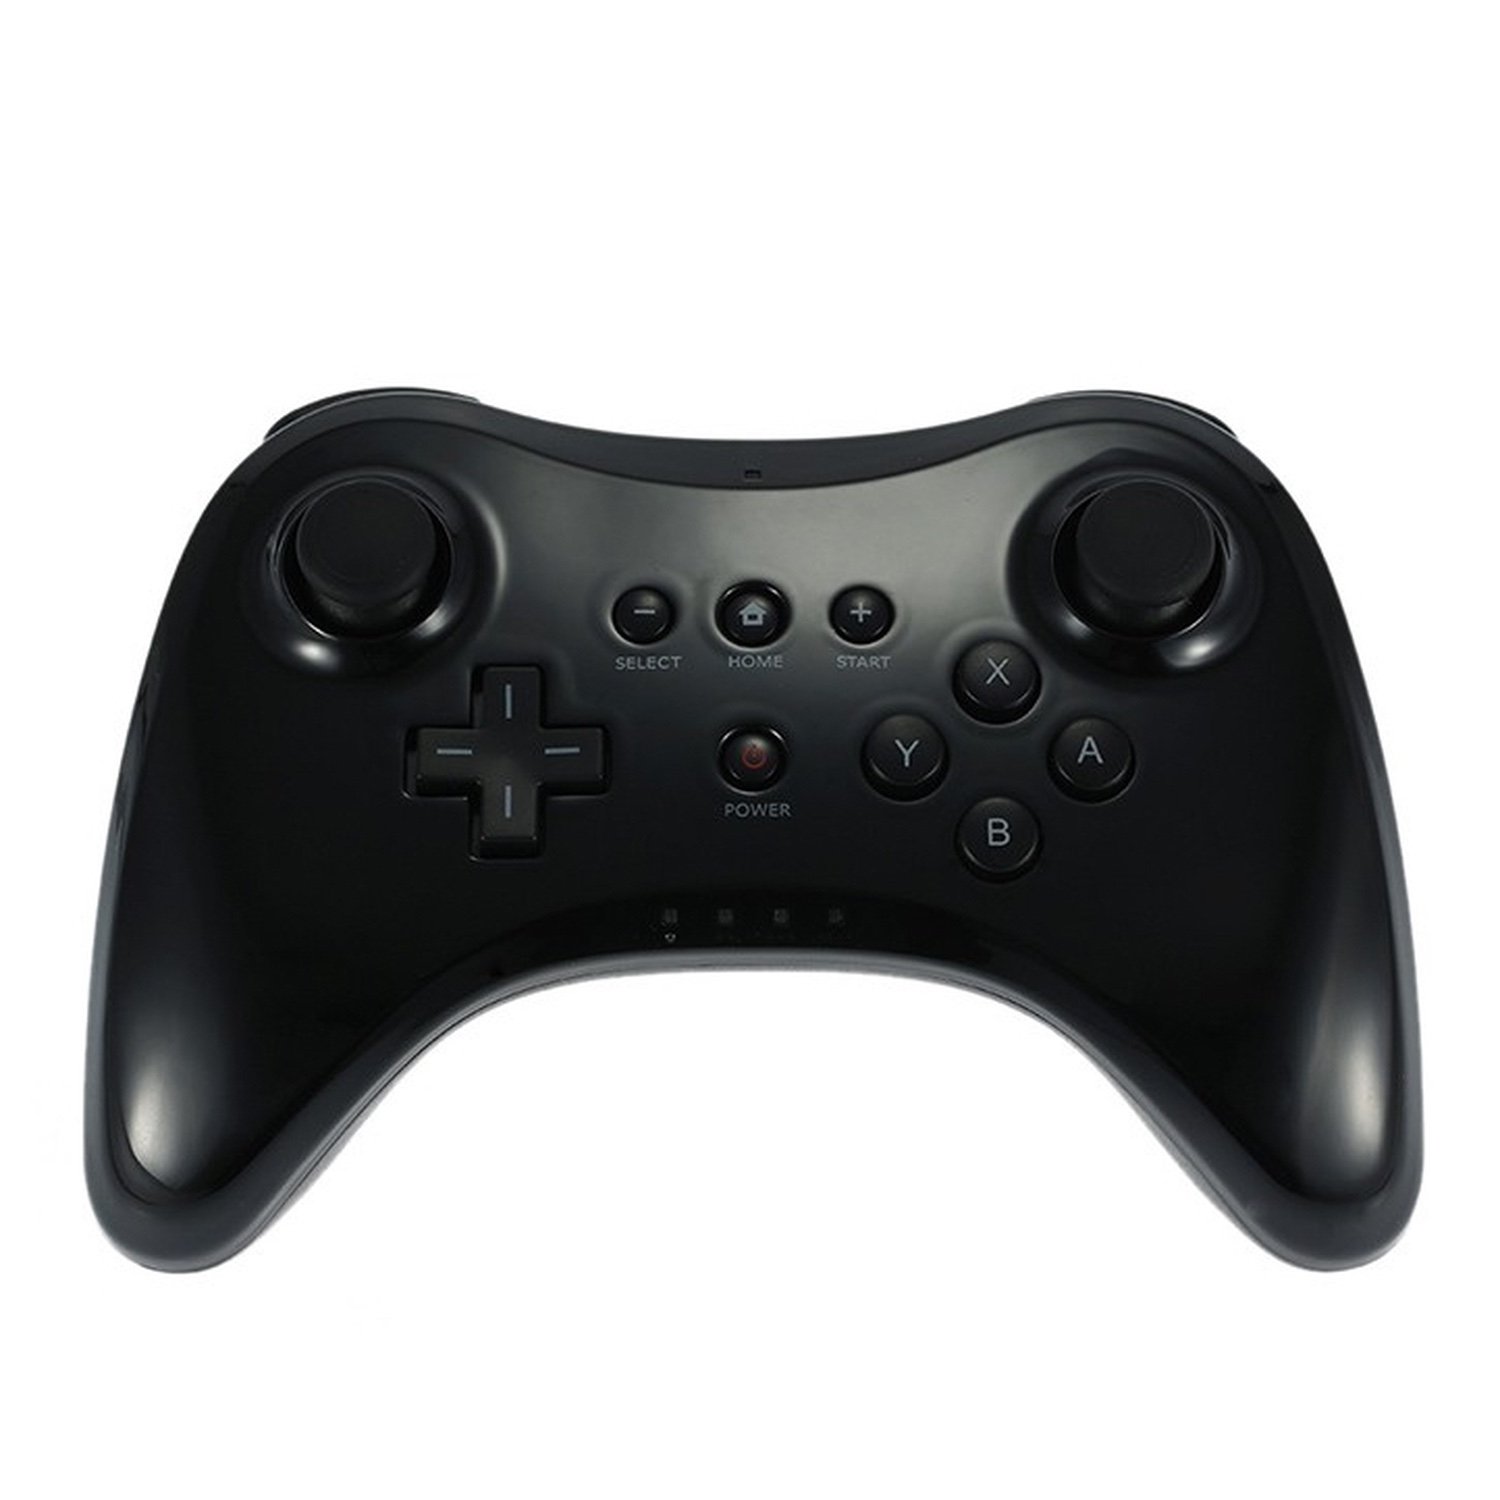 Pro Controller Wii U Black [Compatibel]